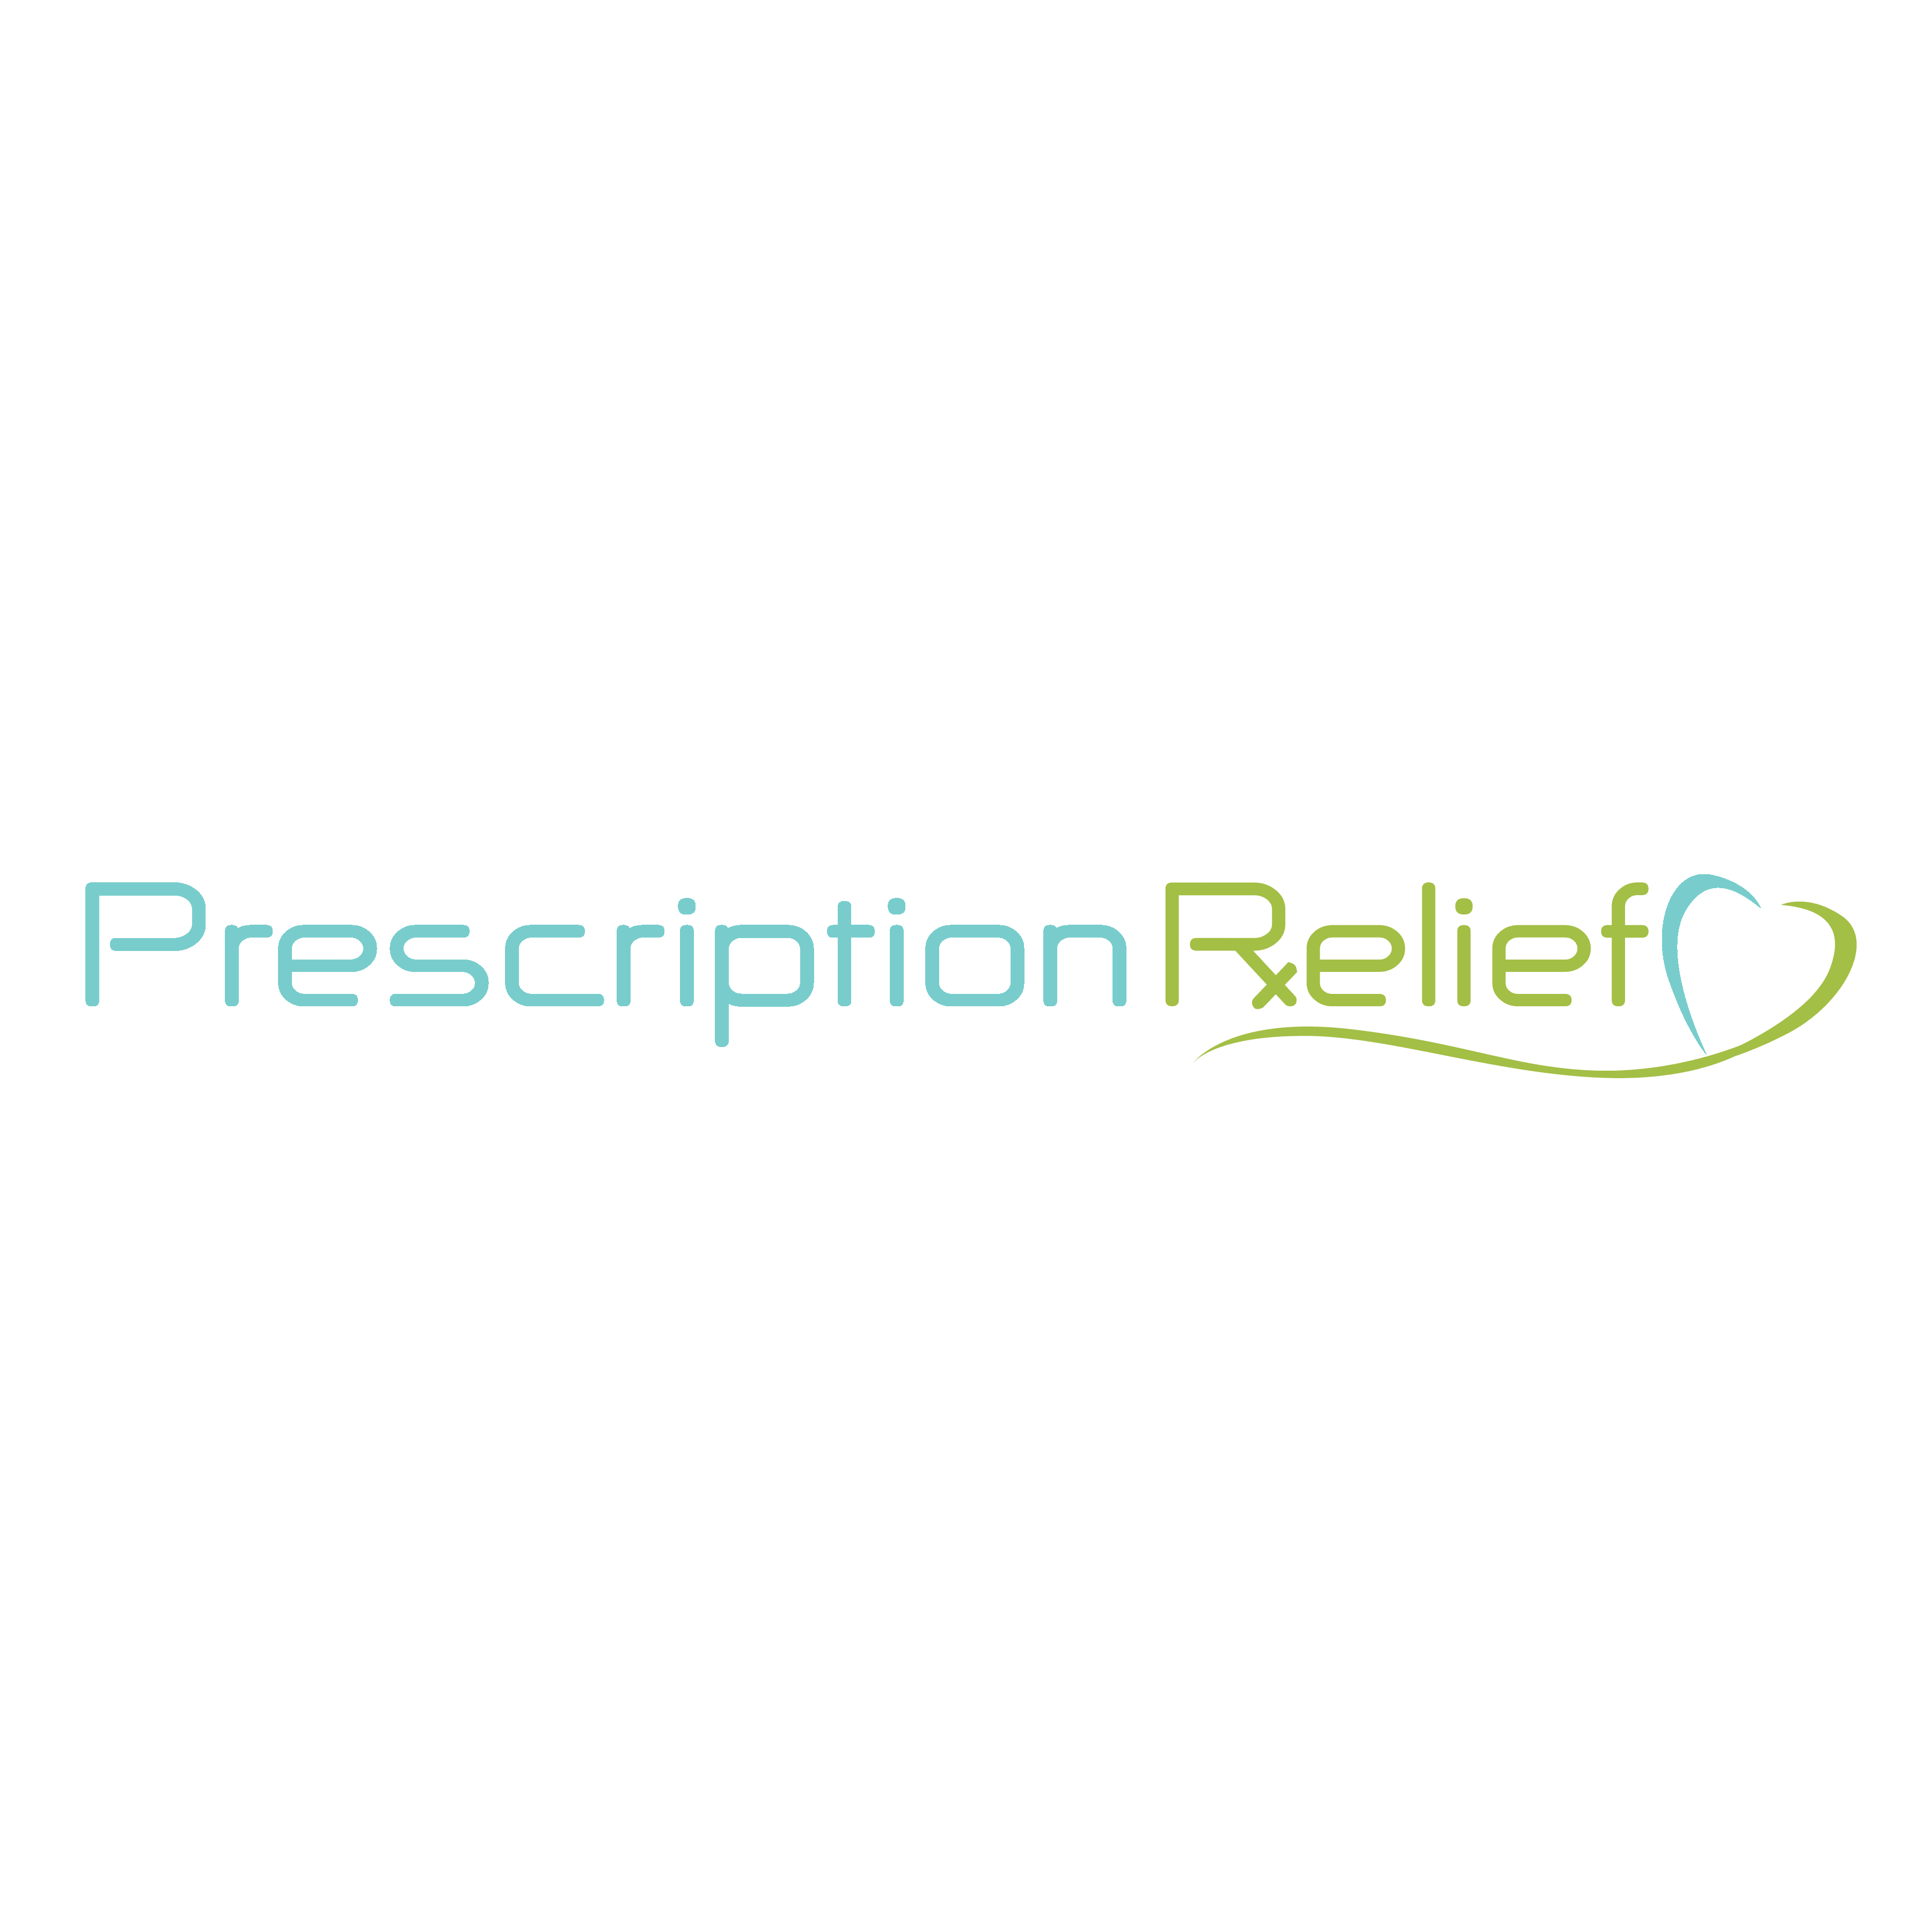 Find Prescription Relief Logo